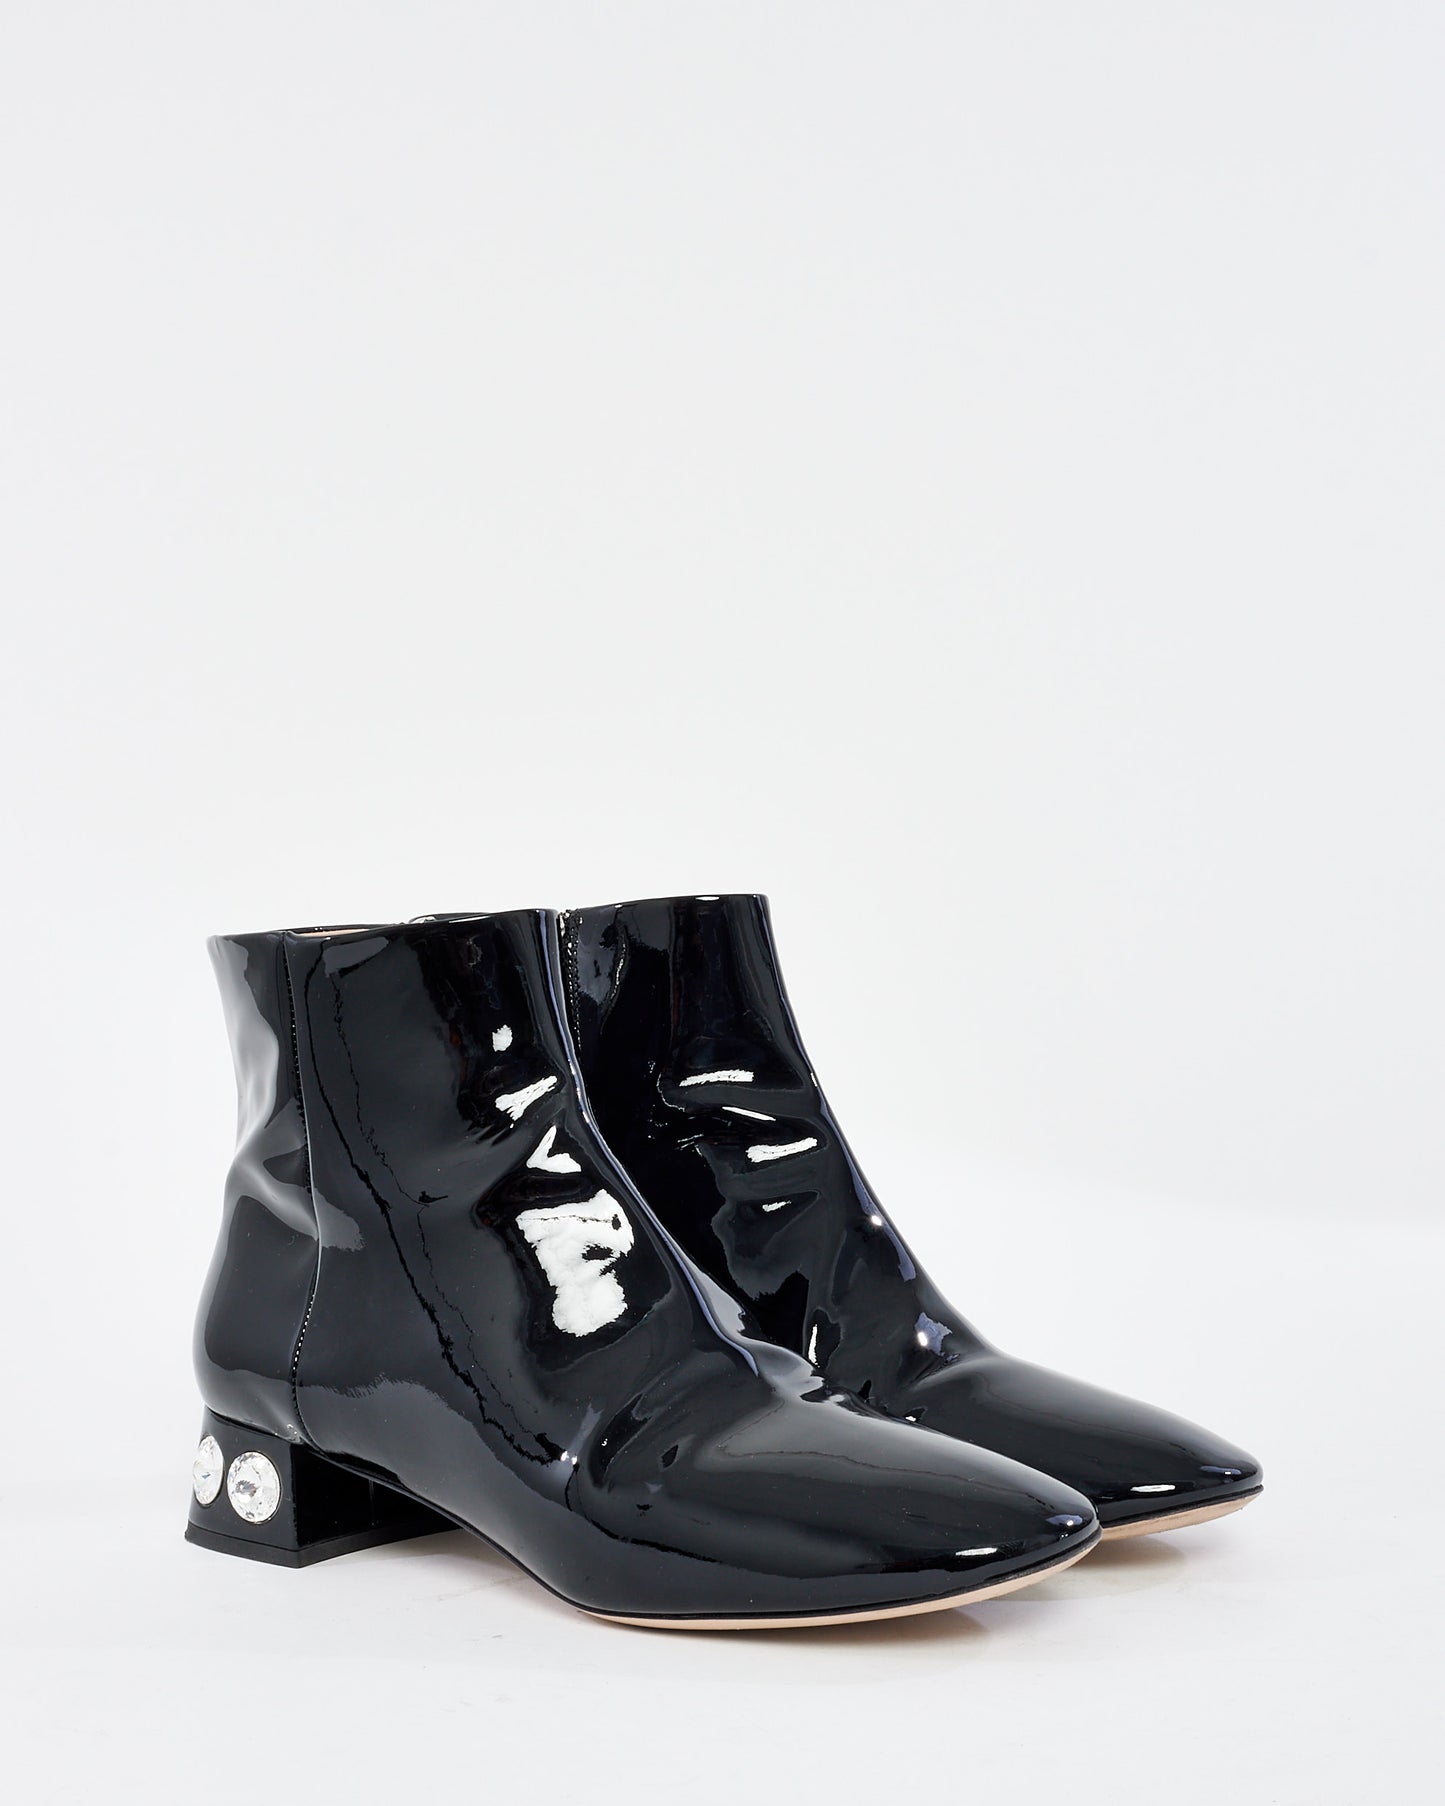 Miu Miu Black Patent Leather Ankle Boot with Jewel Heel - 39